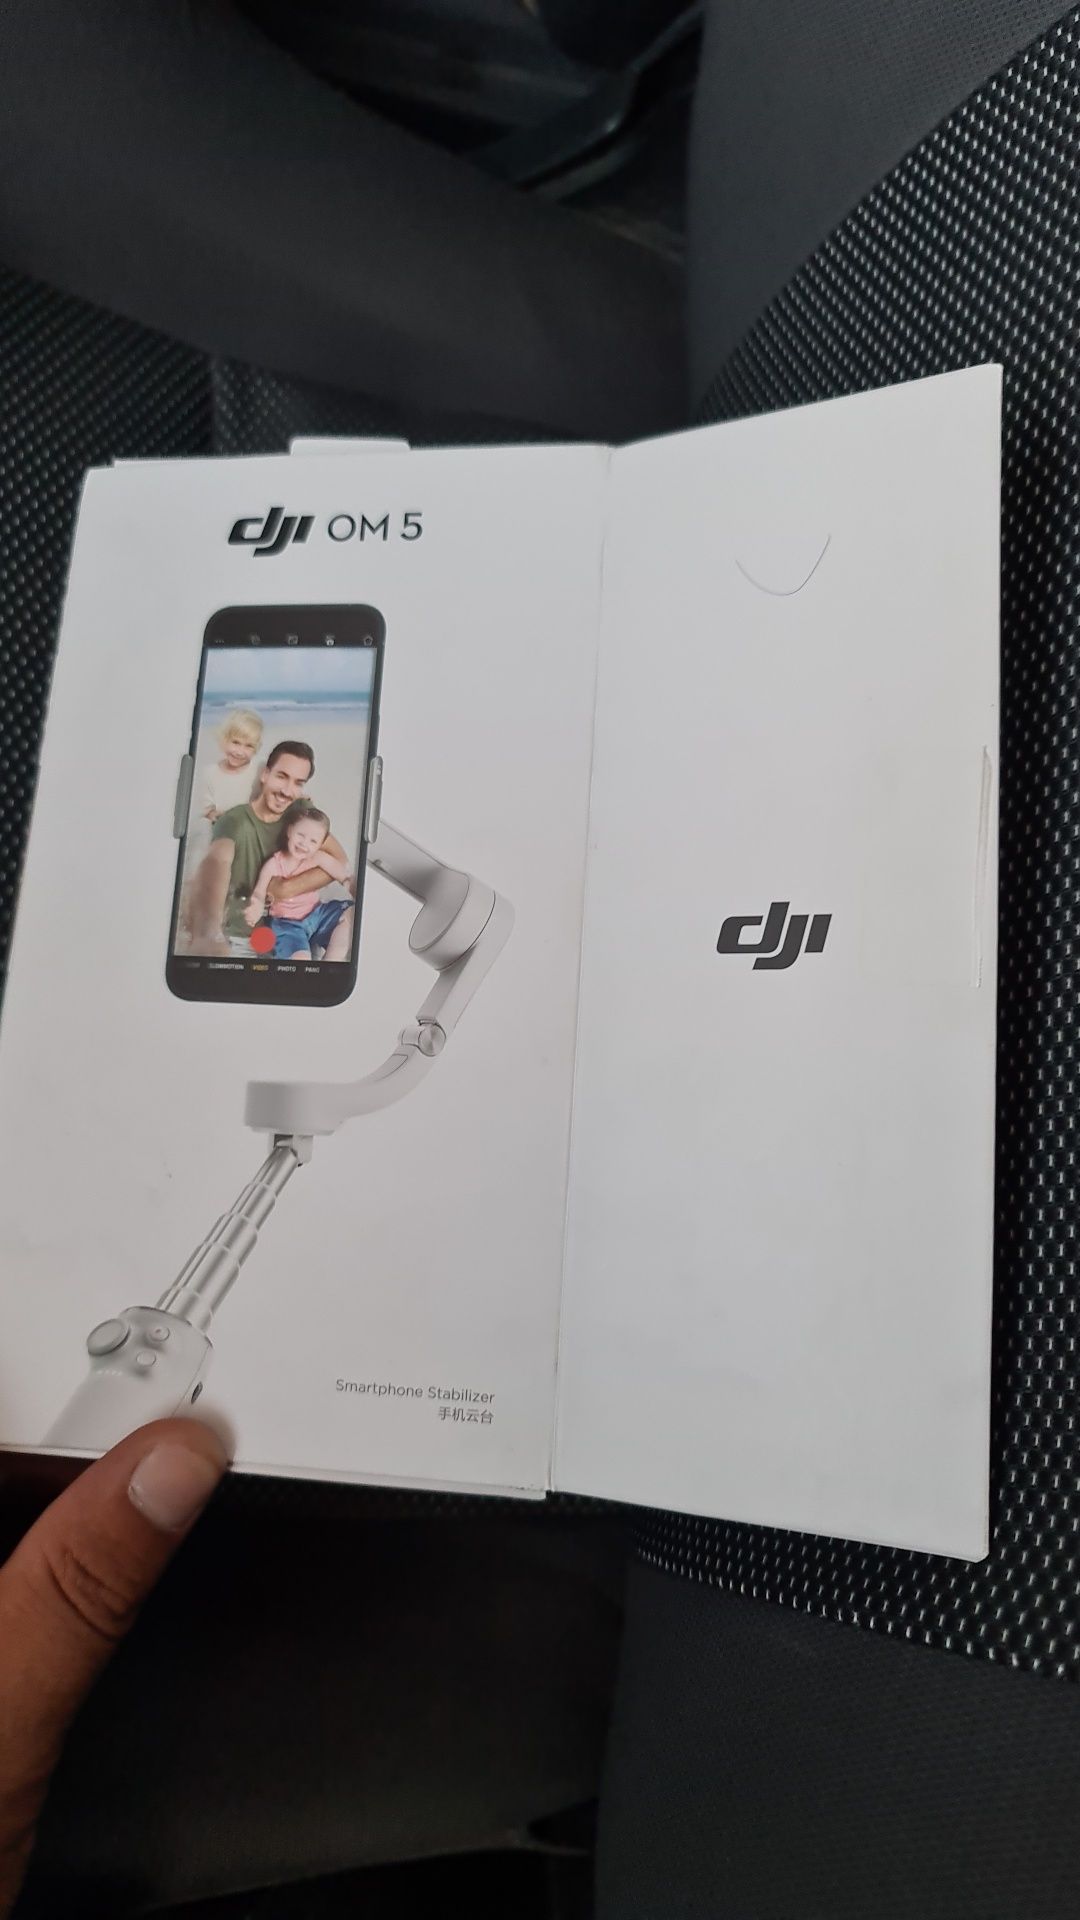 Dji om5 стабилизатор для телефона